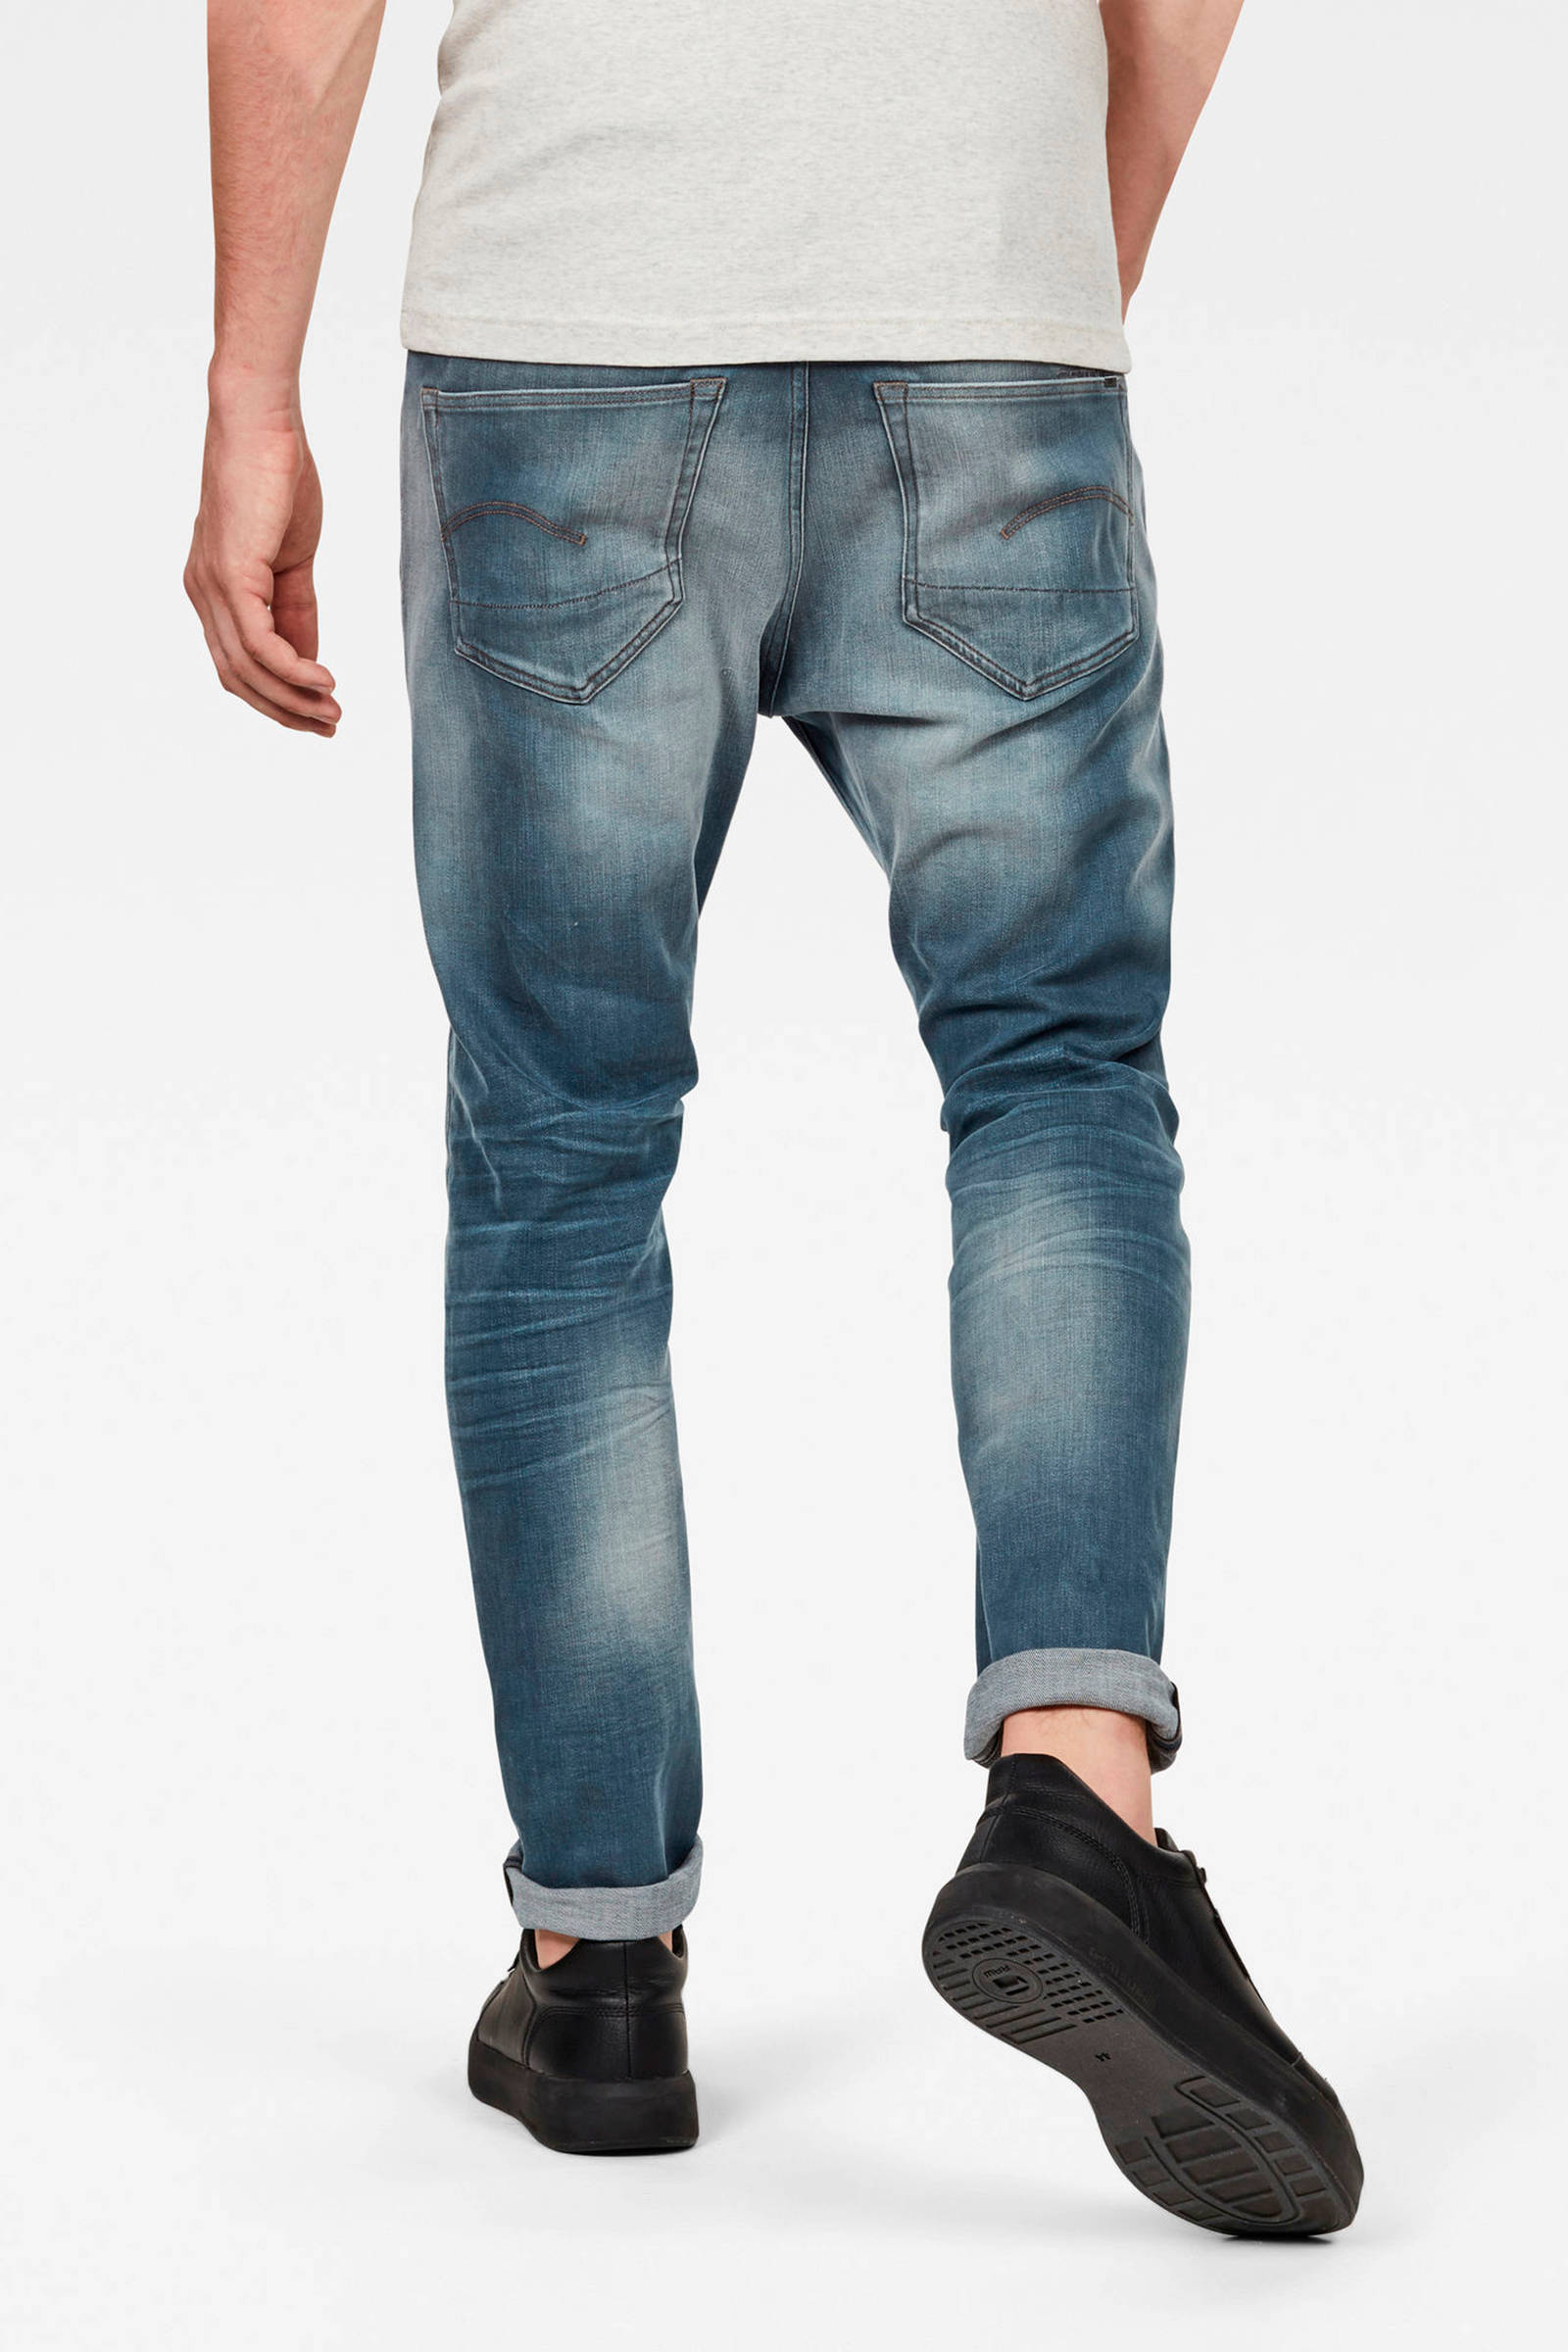 gstar 3301 slim jeans